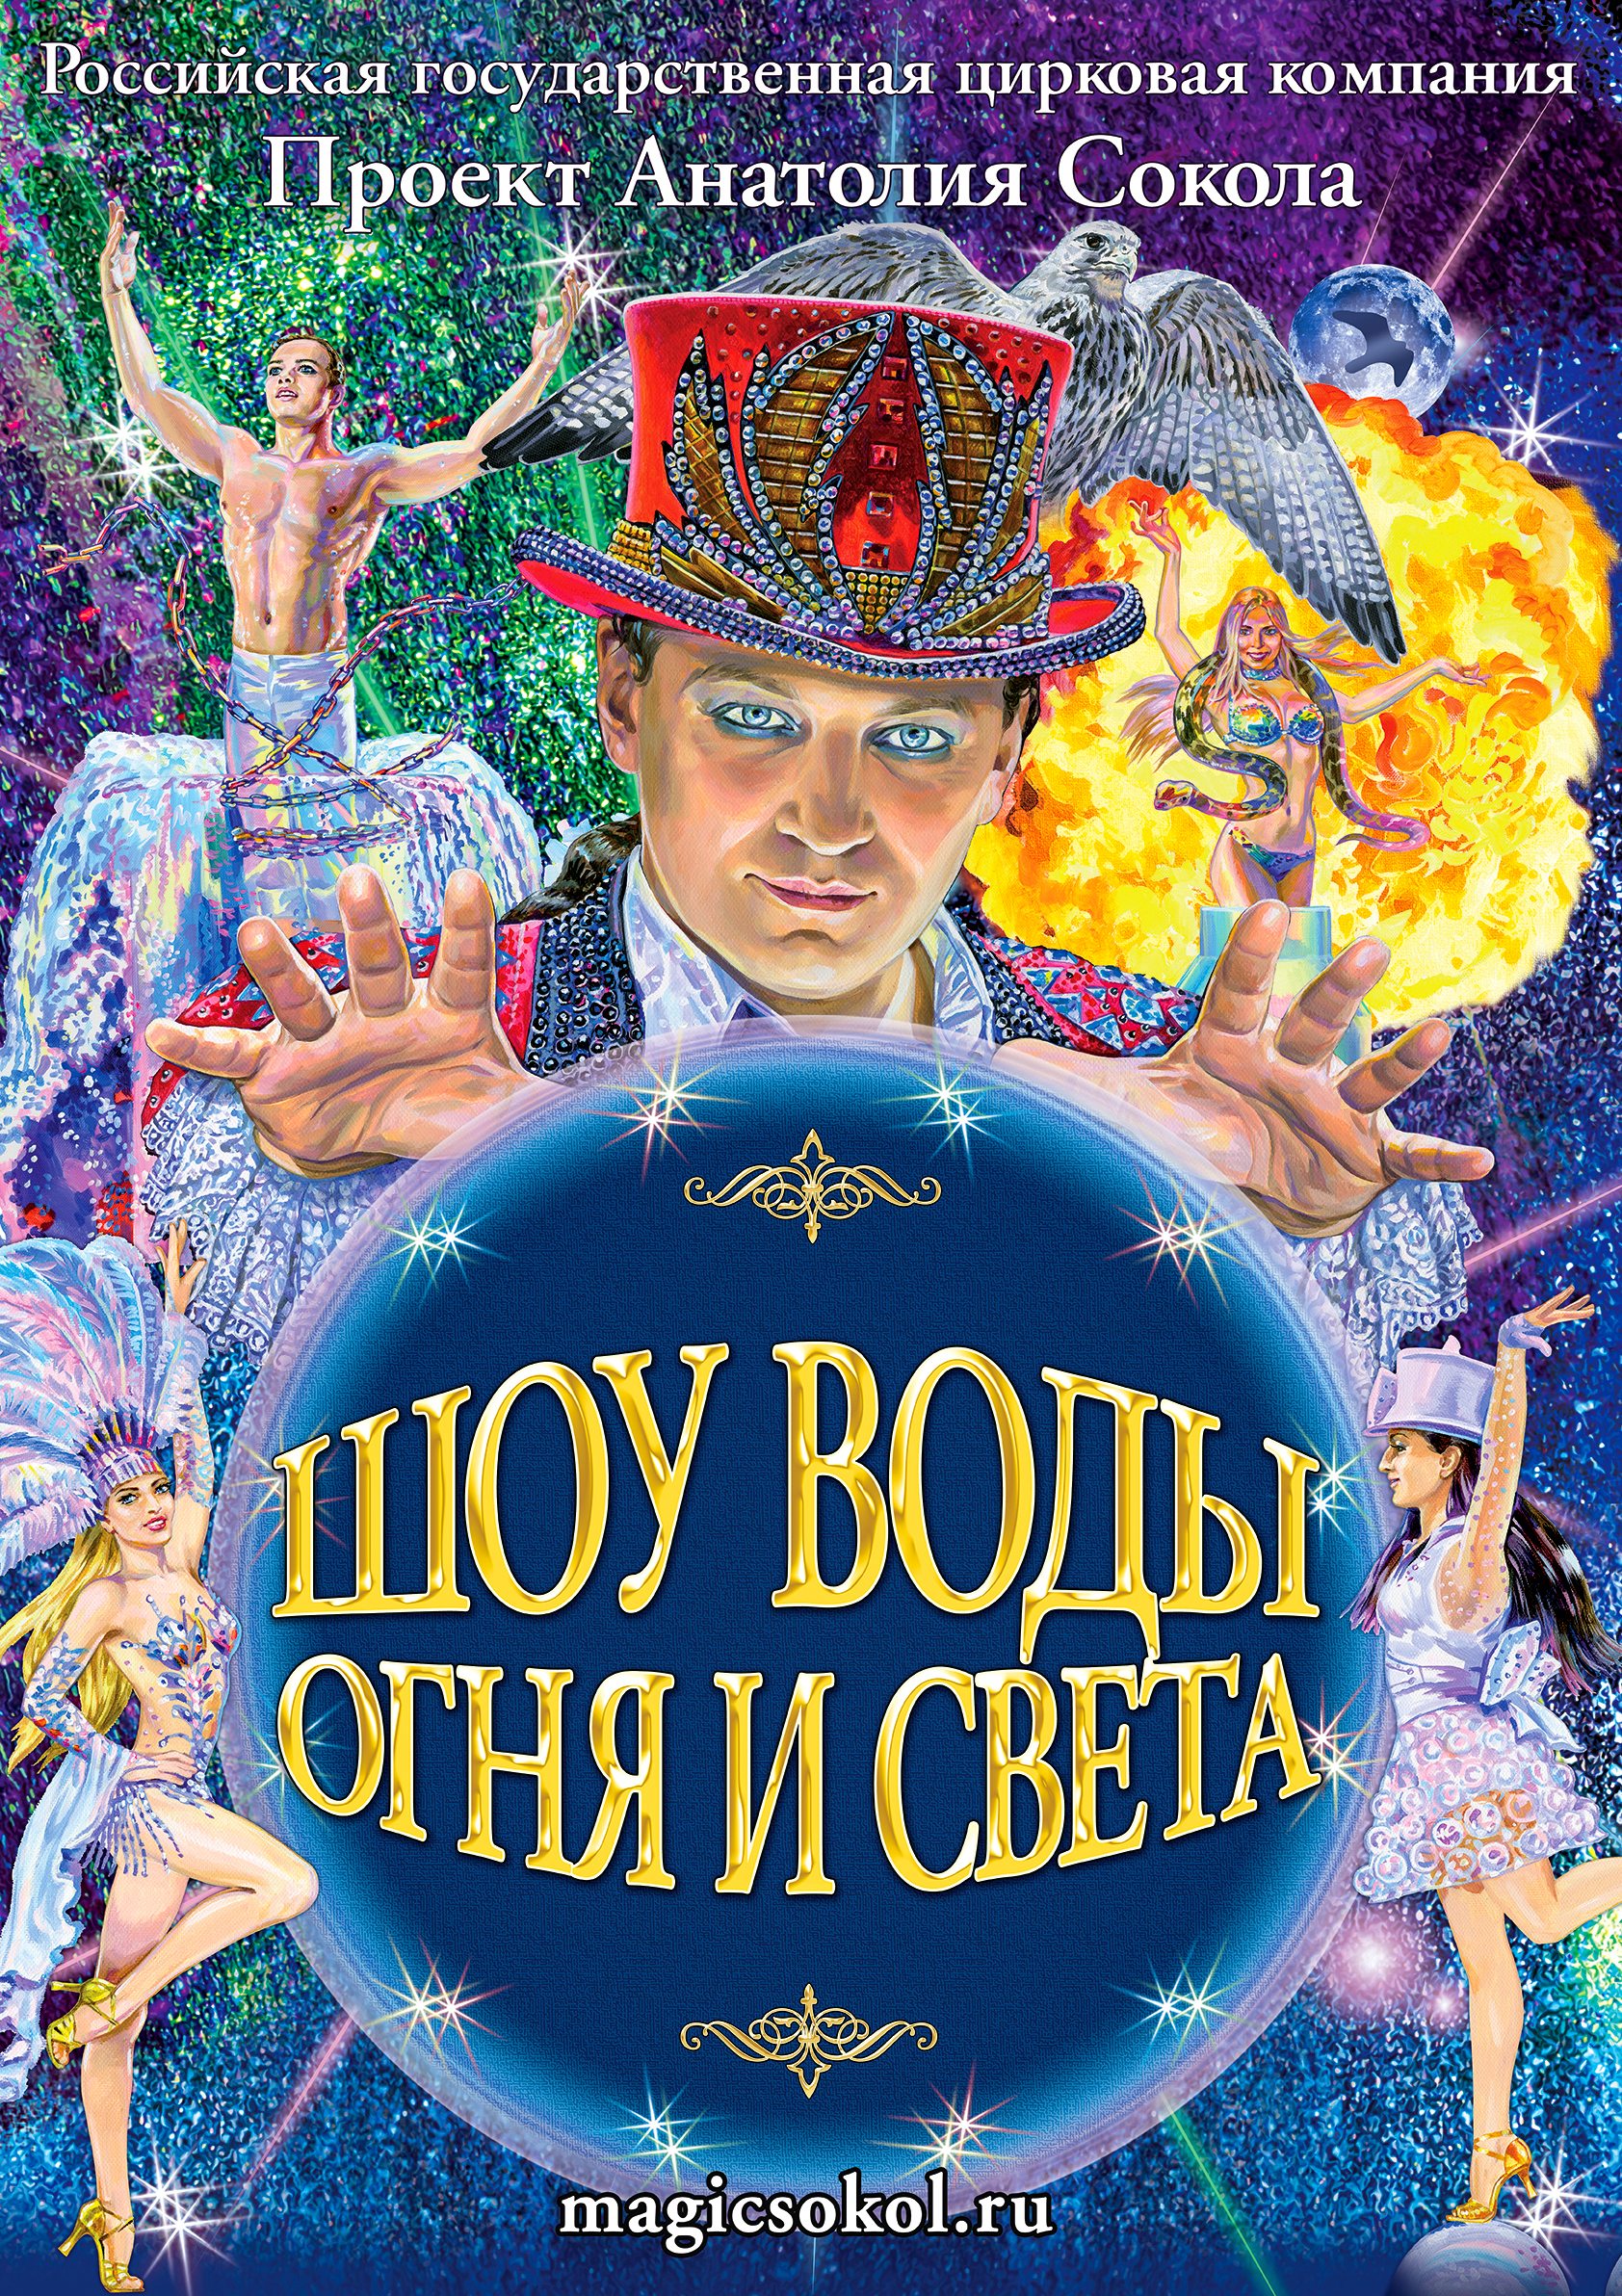 You are currently viewing Цирк гигантских фонтанов «Шоу воды, огня и света!»